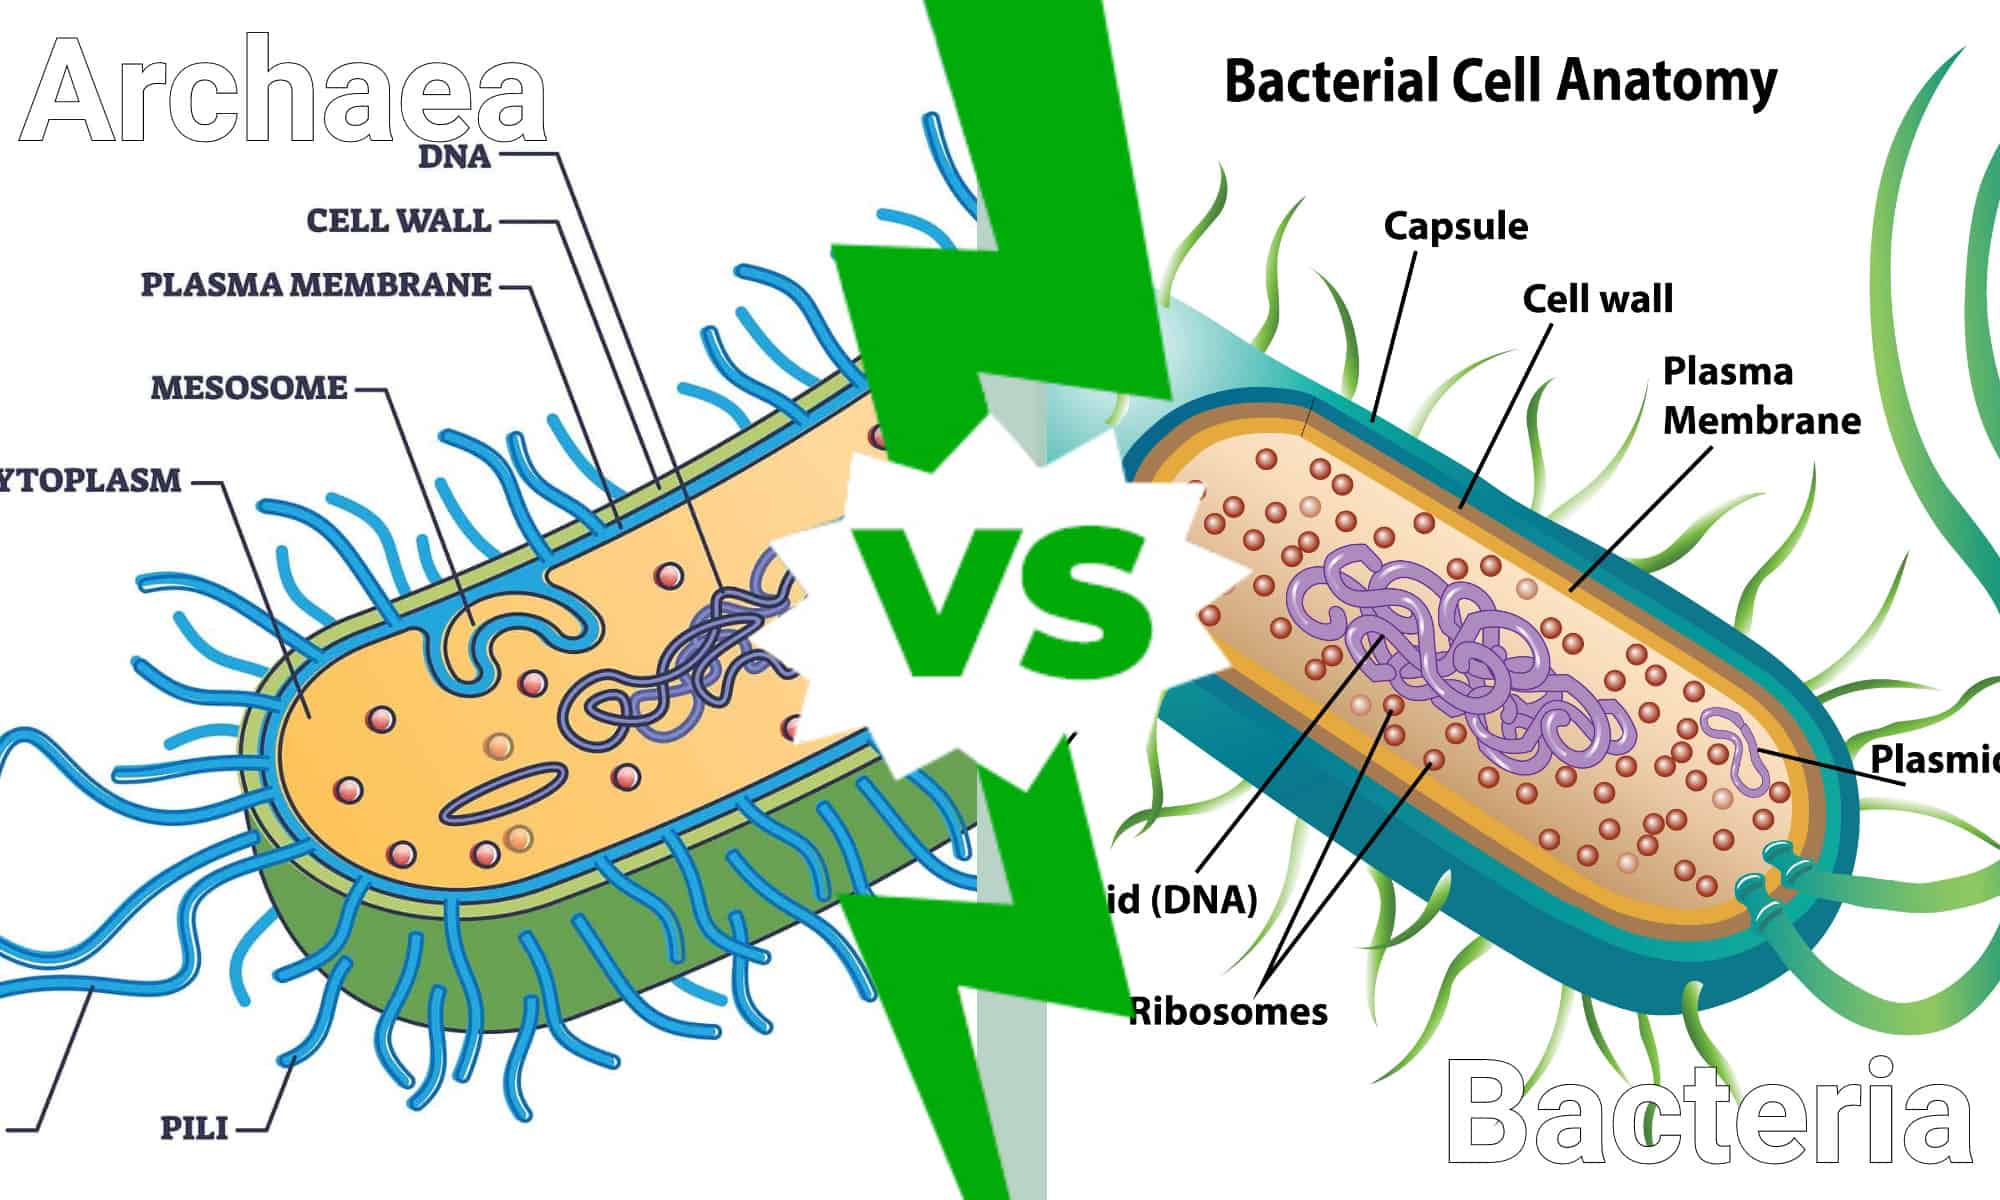 Archaea vs. Bacteria